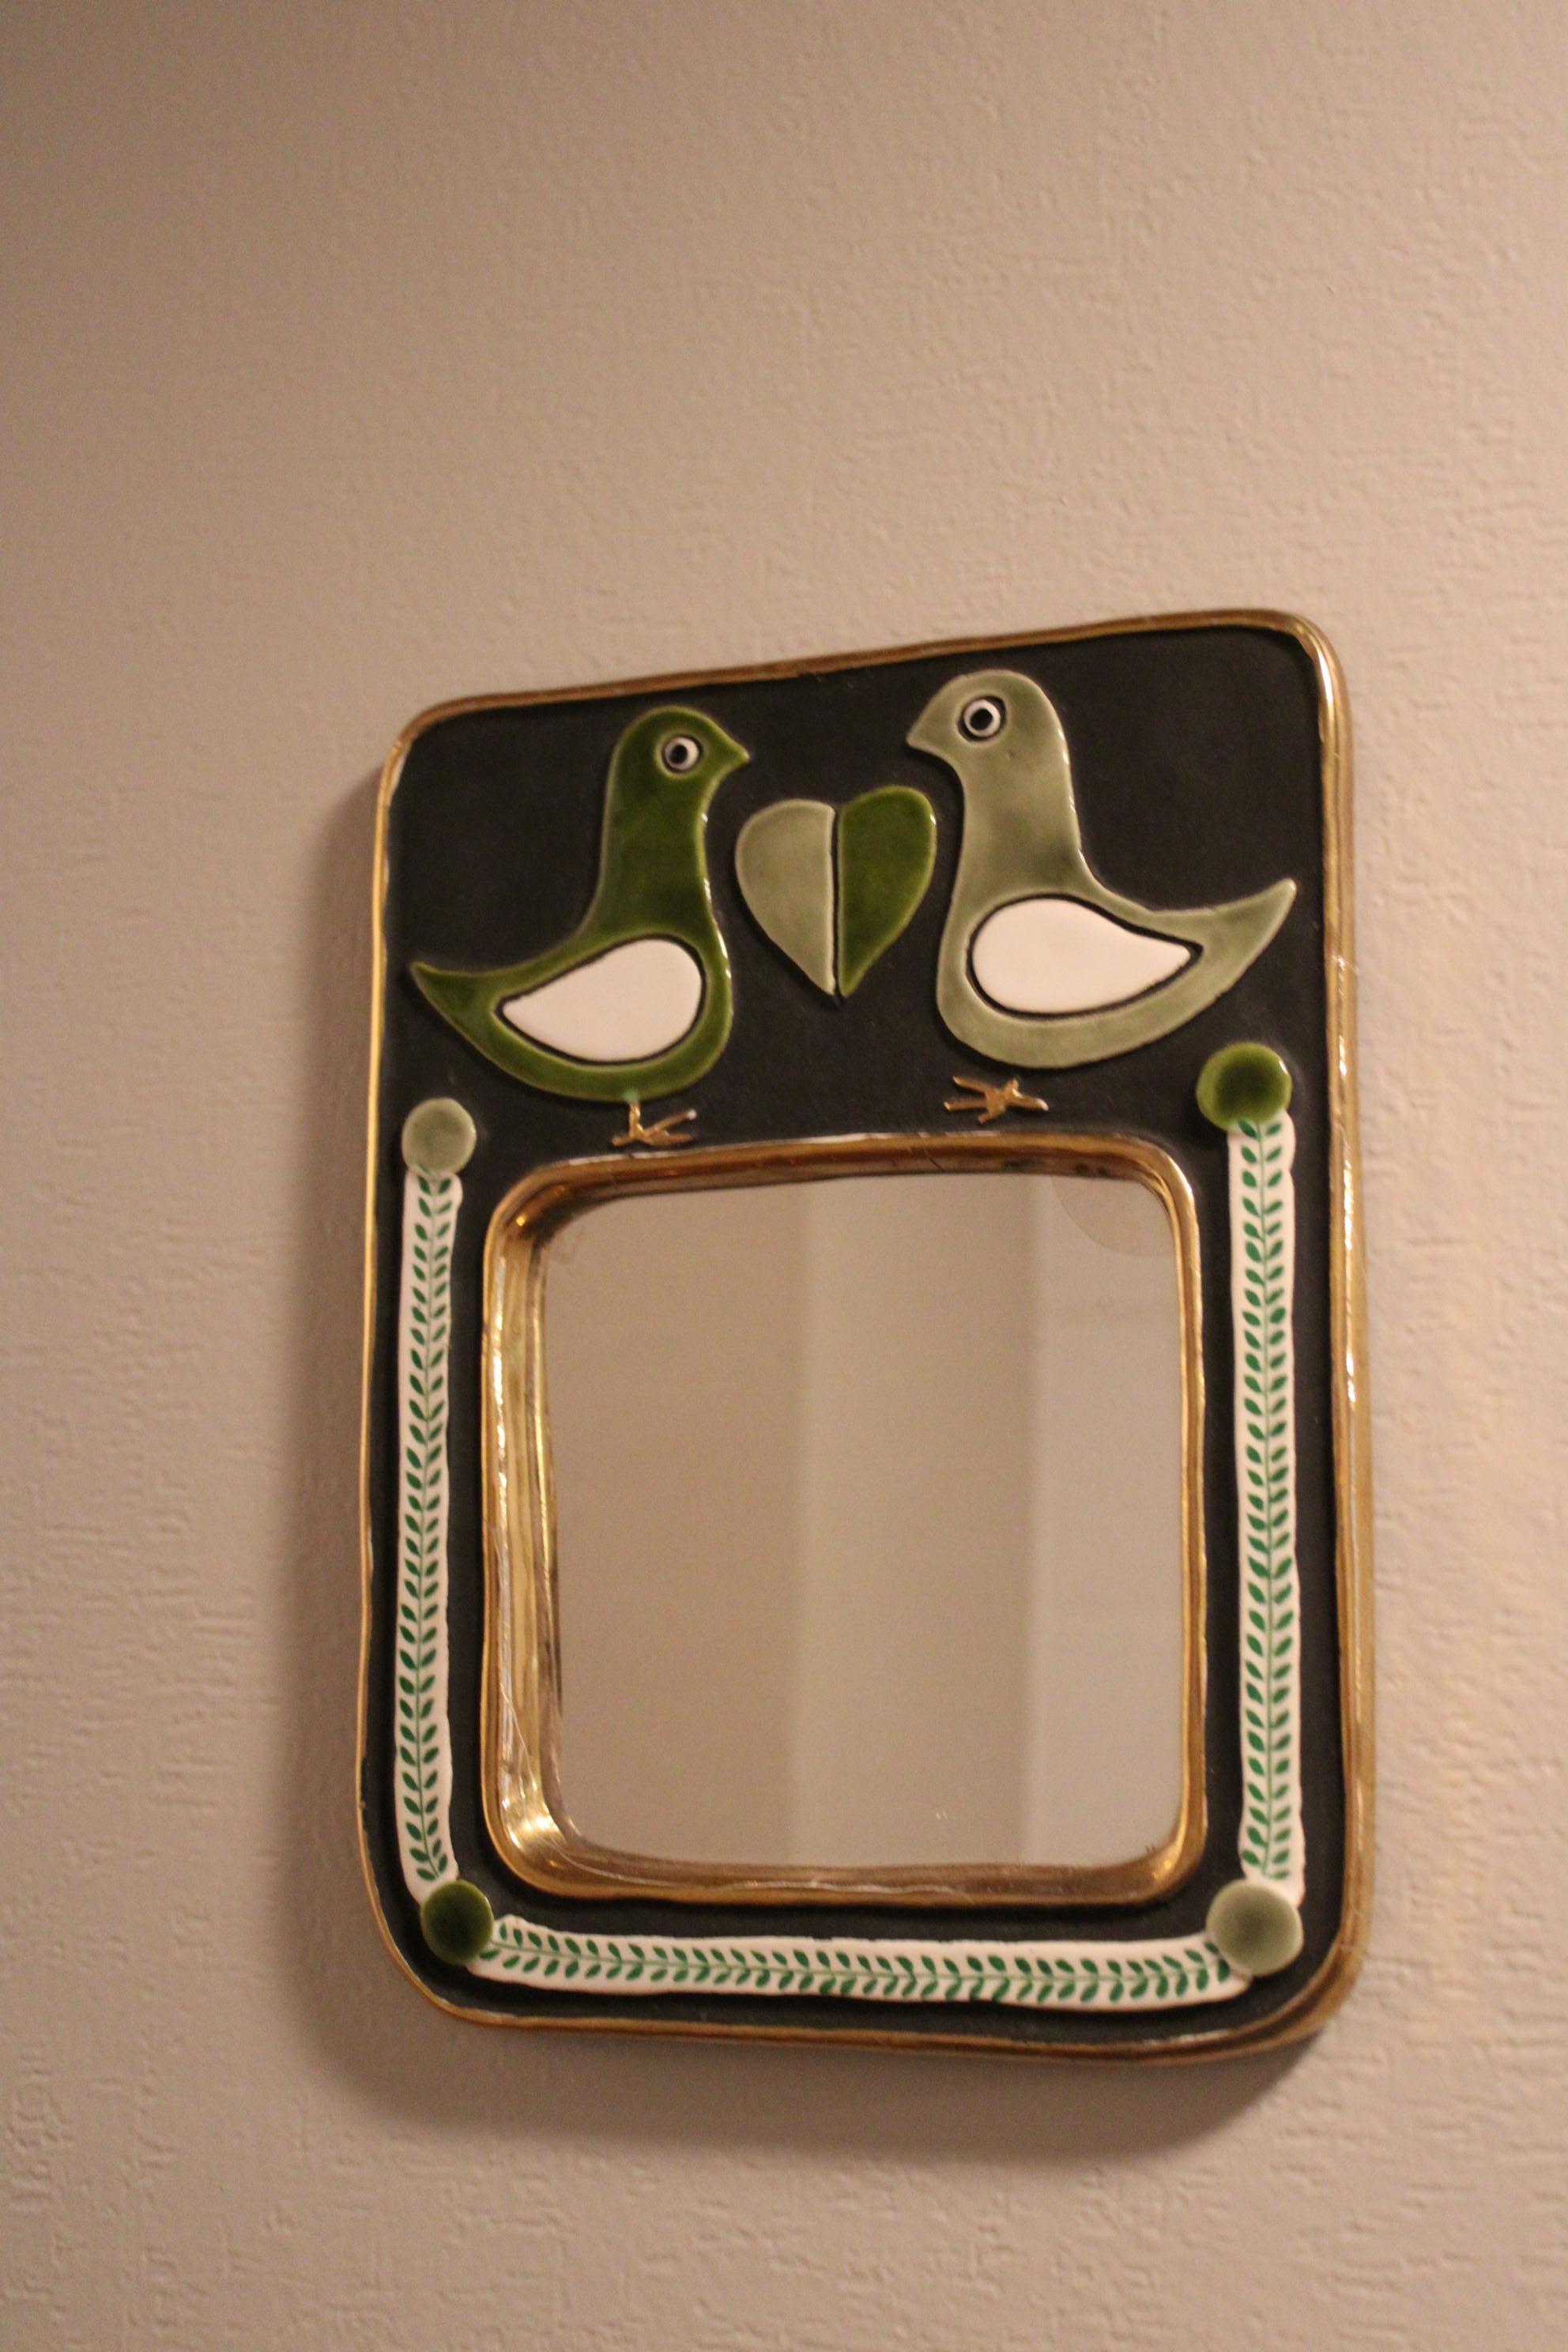 Ceramic Miroir by Mithe Espelt
Representing 2 birds 
France, circa 1960